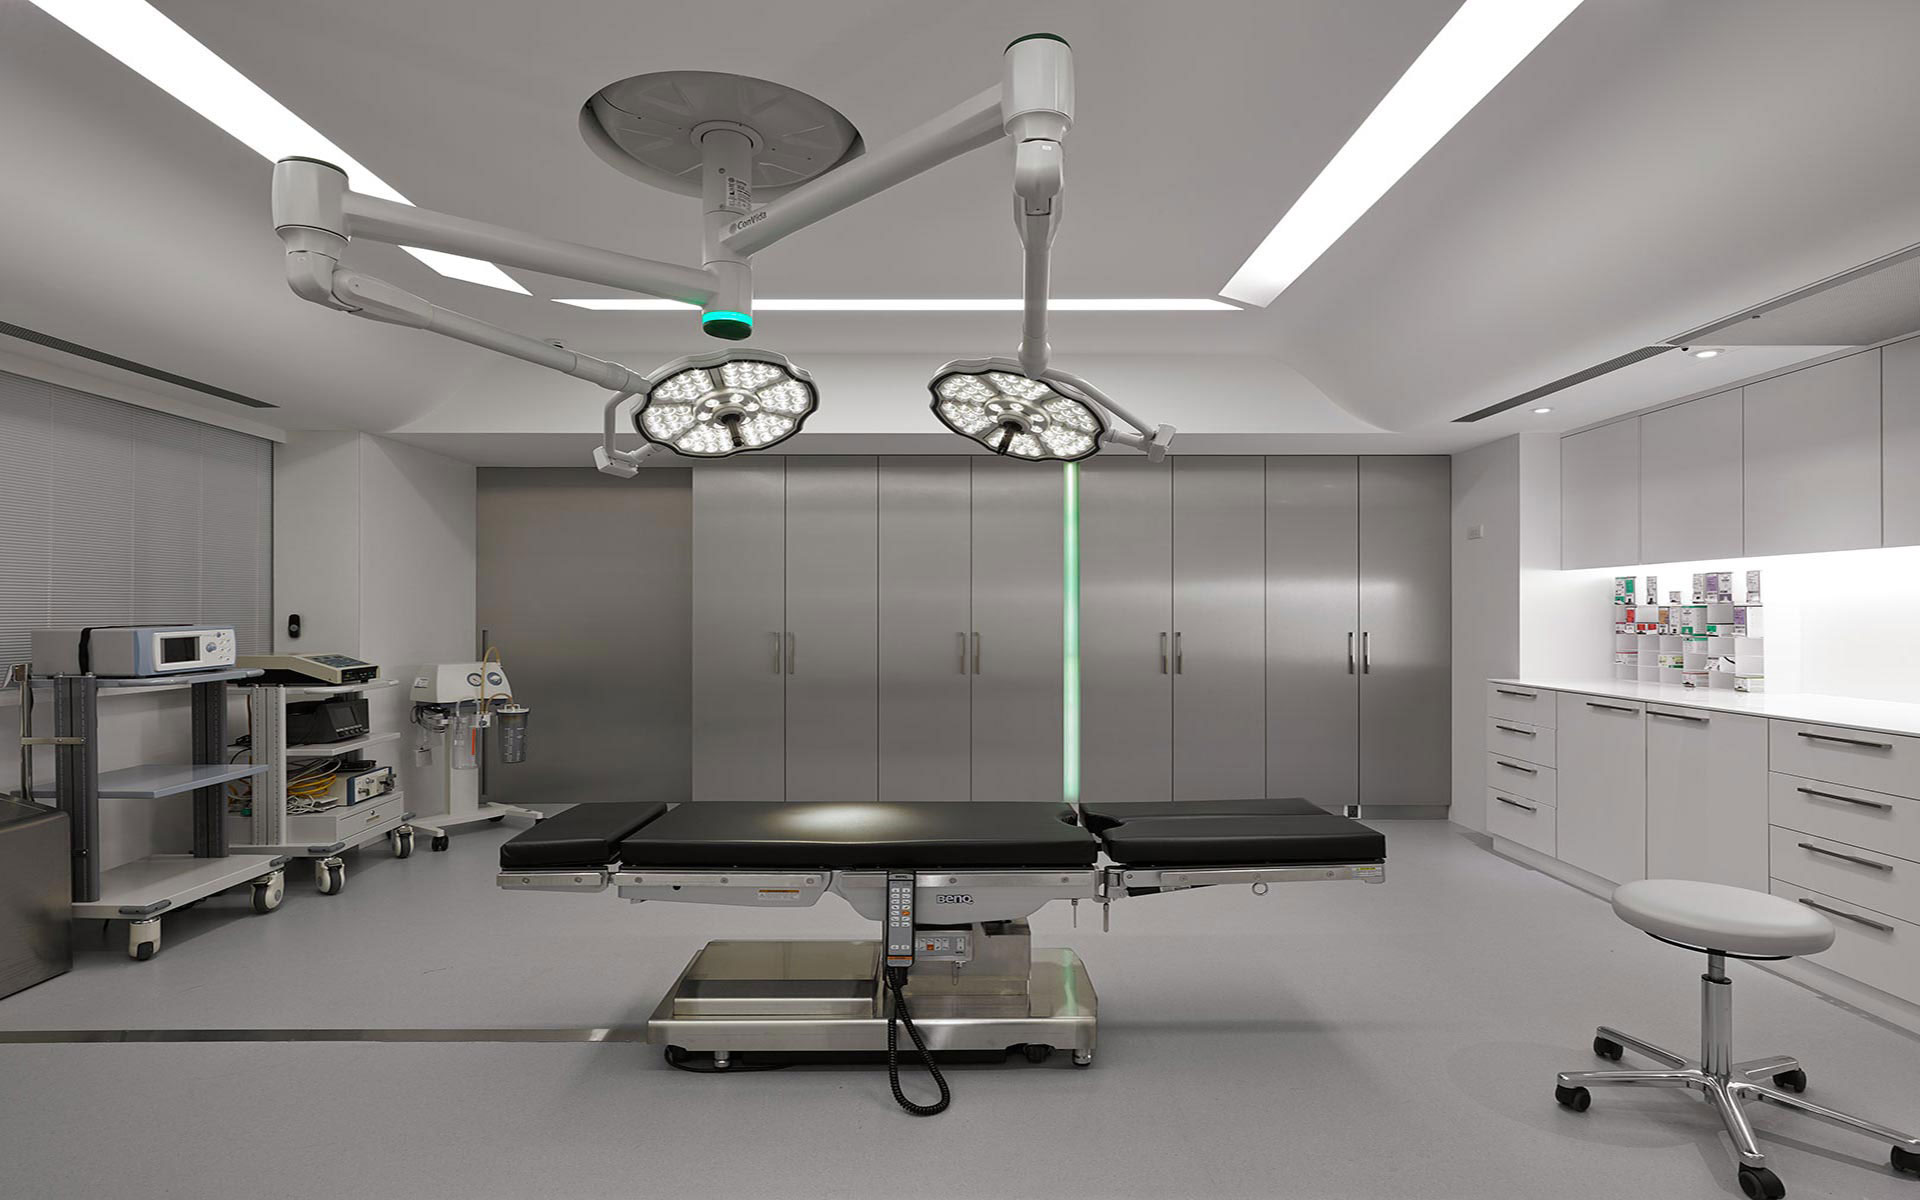 Endoscopic operation room